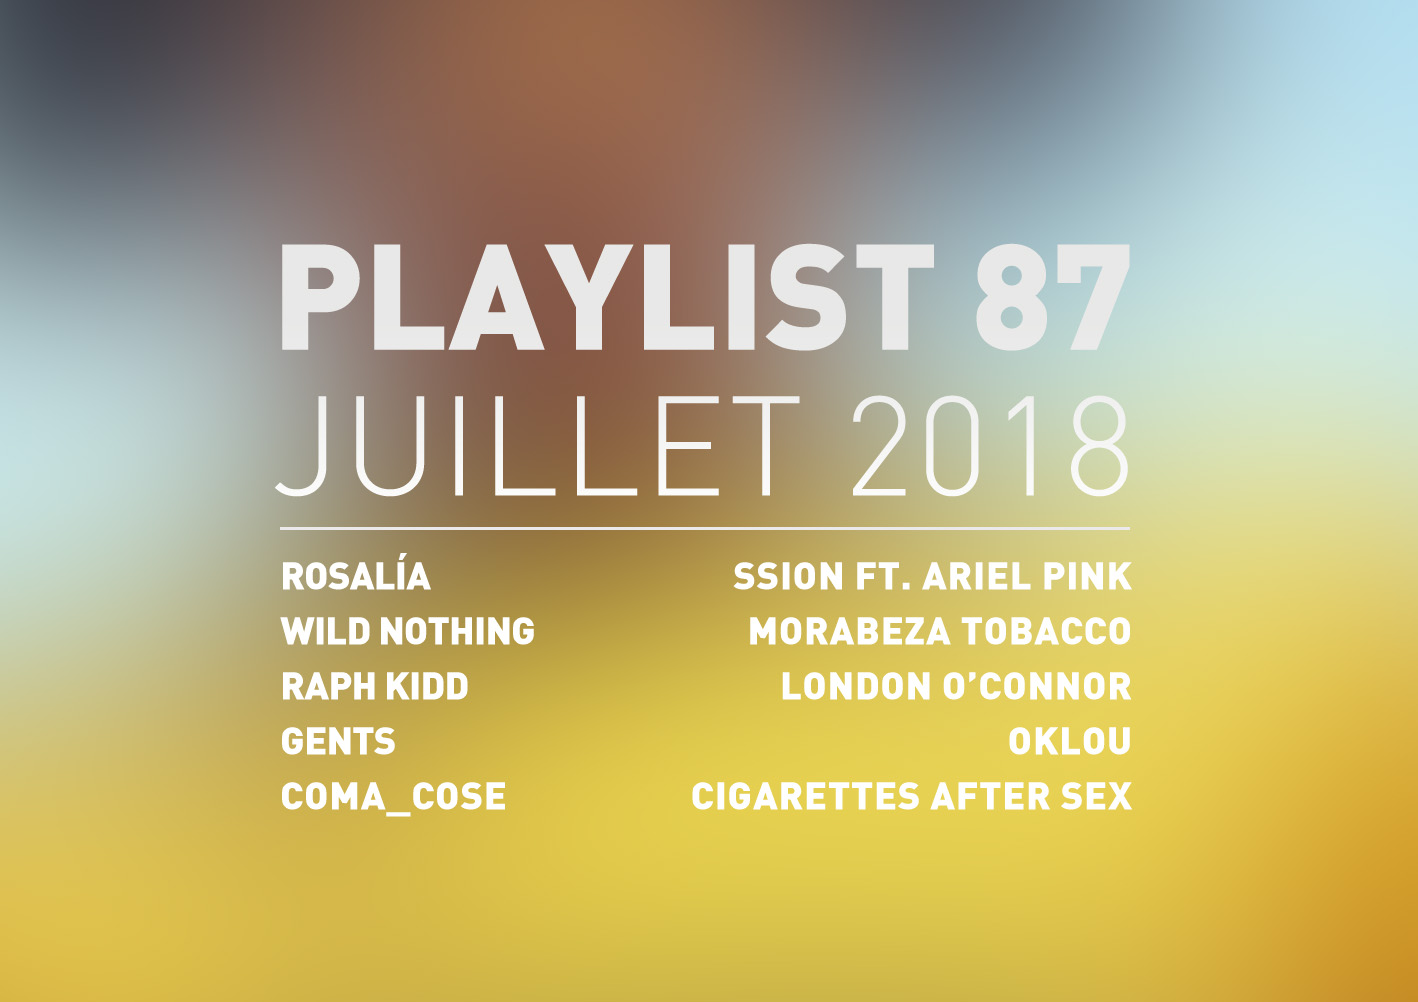 Playlist #87 : Rosalía, Coma_Cose, GENTS, Cigarettes After Sex, etc.